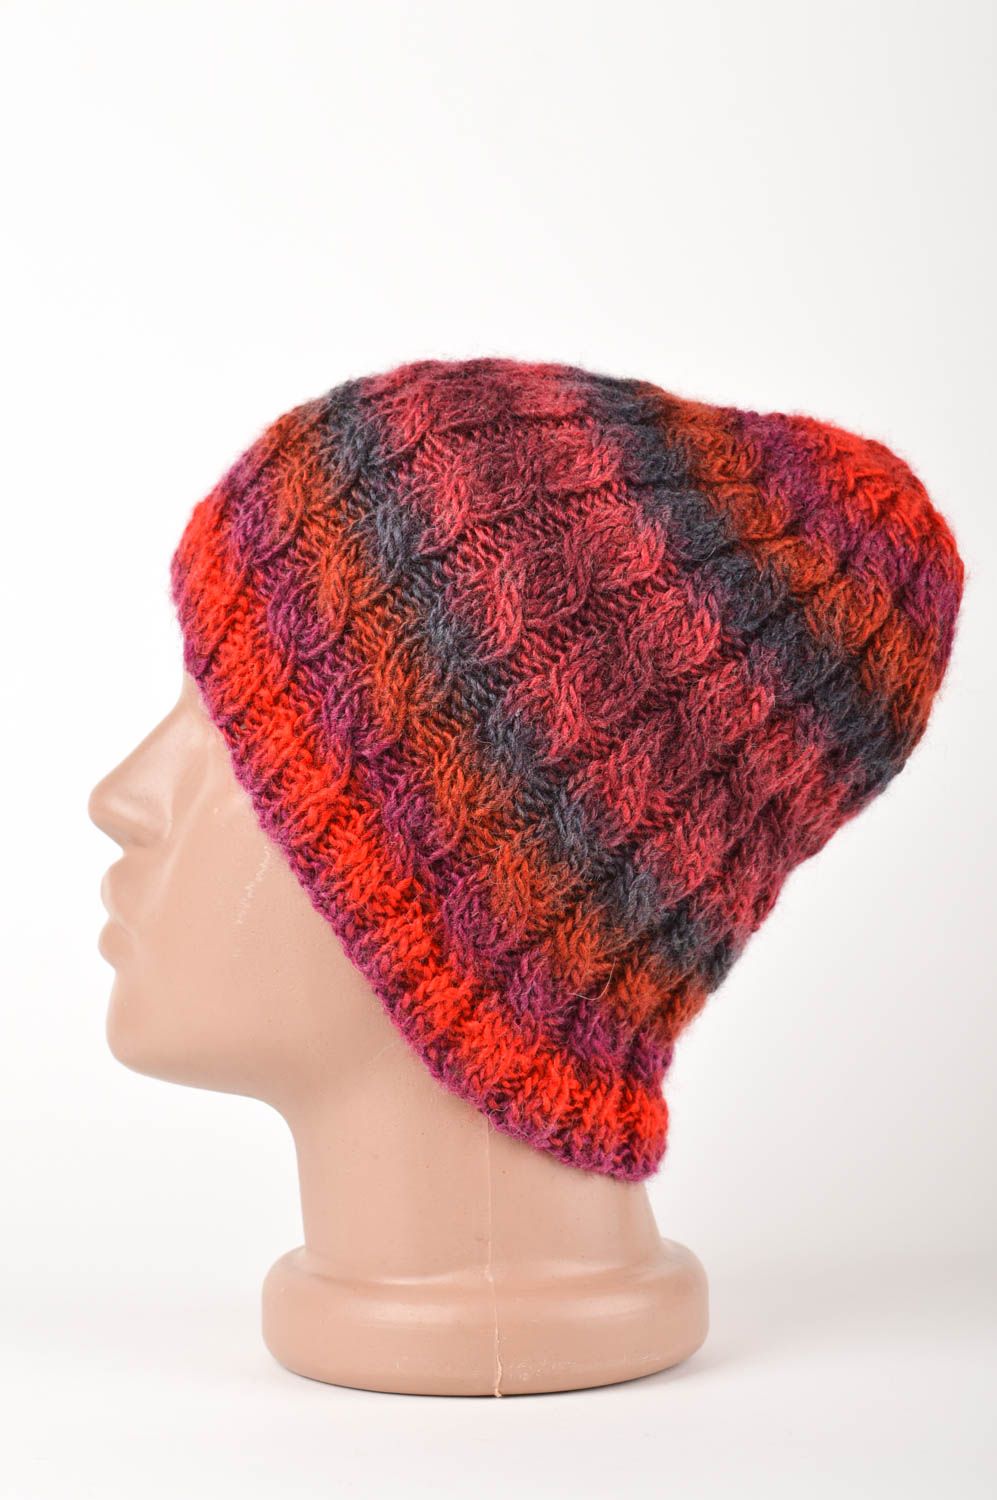 Handmade crochet hat fashion hats winter hats for women best gifts for women photo 3